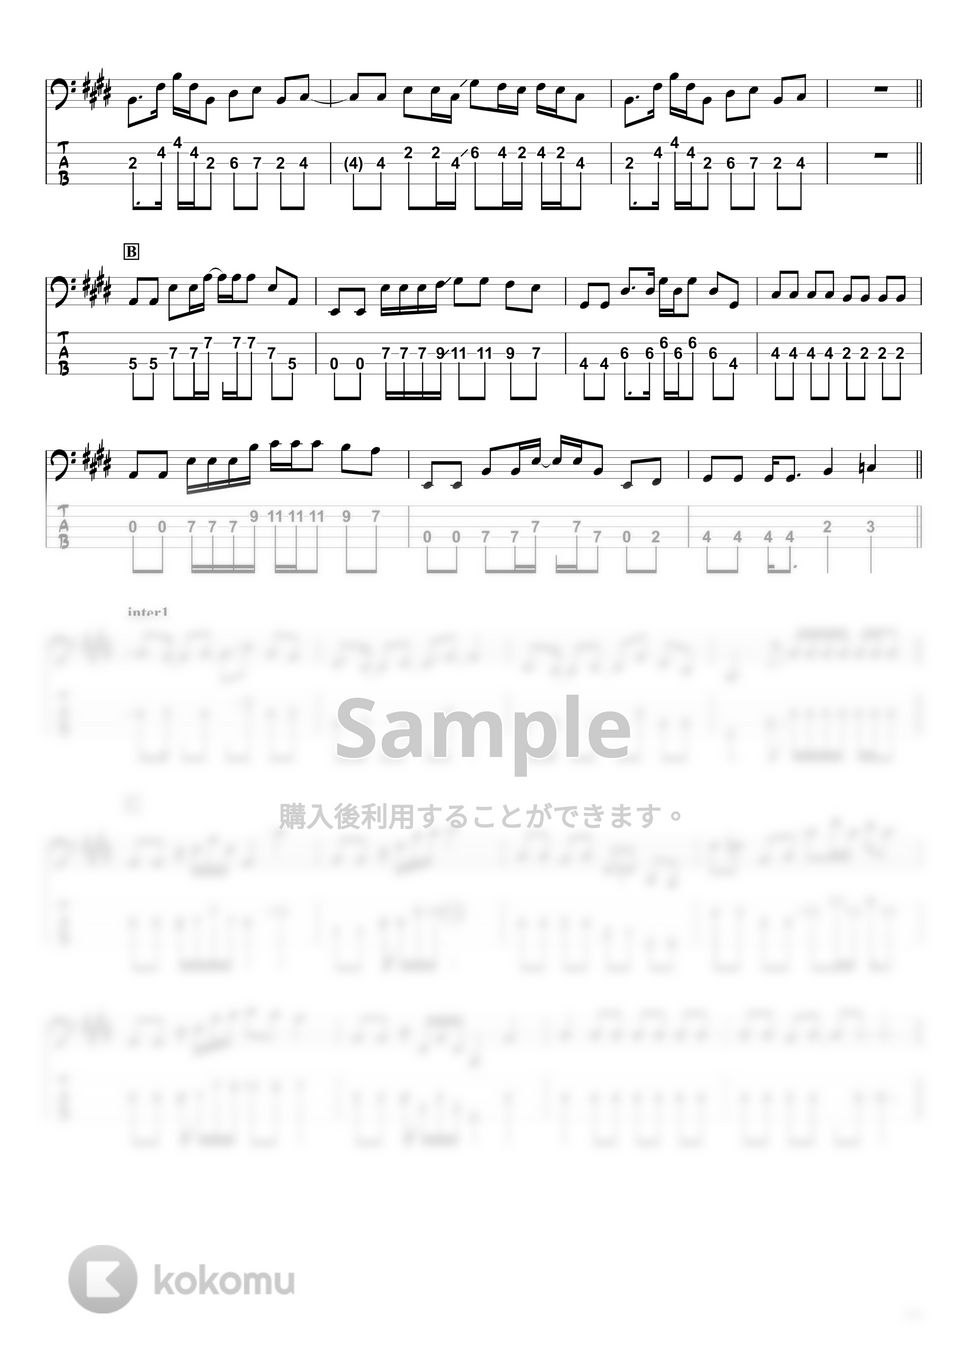 B'z - 有頂天 (ベースTAB譜☆5弦ベース対応) by swbass